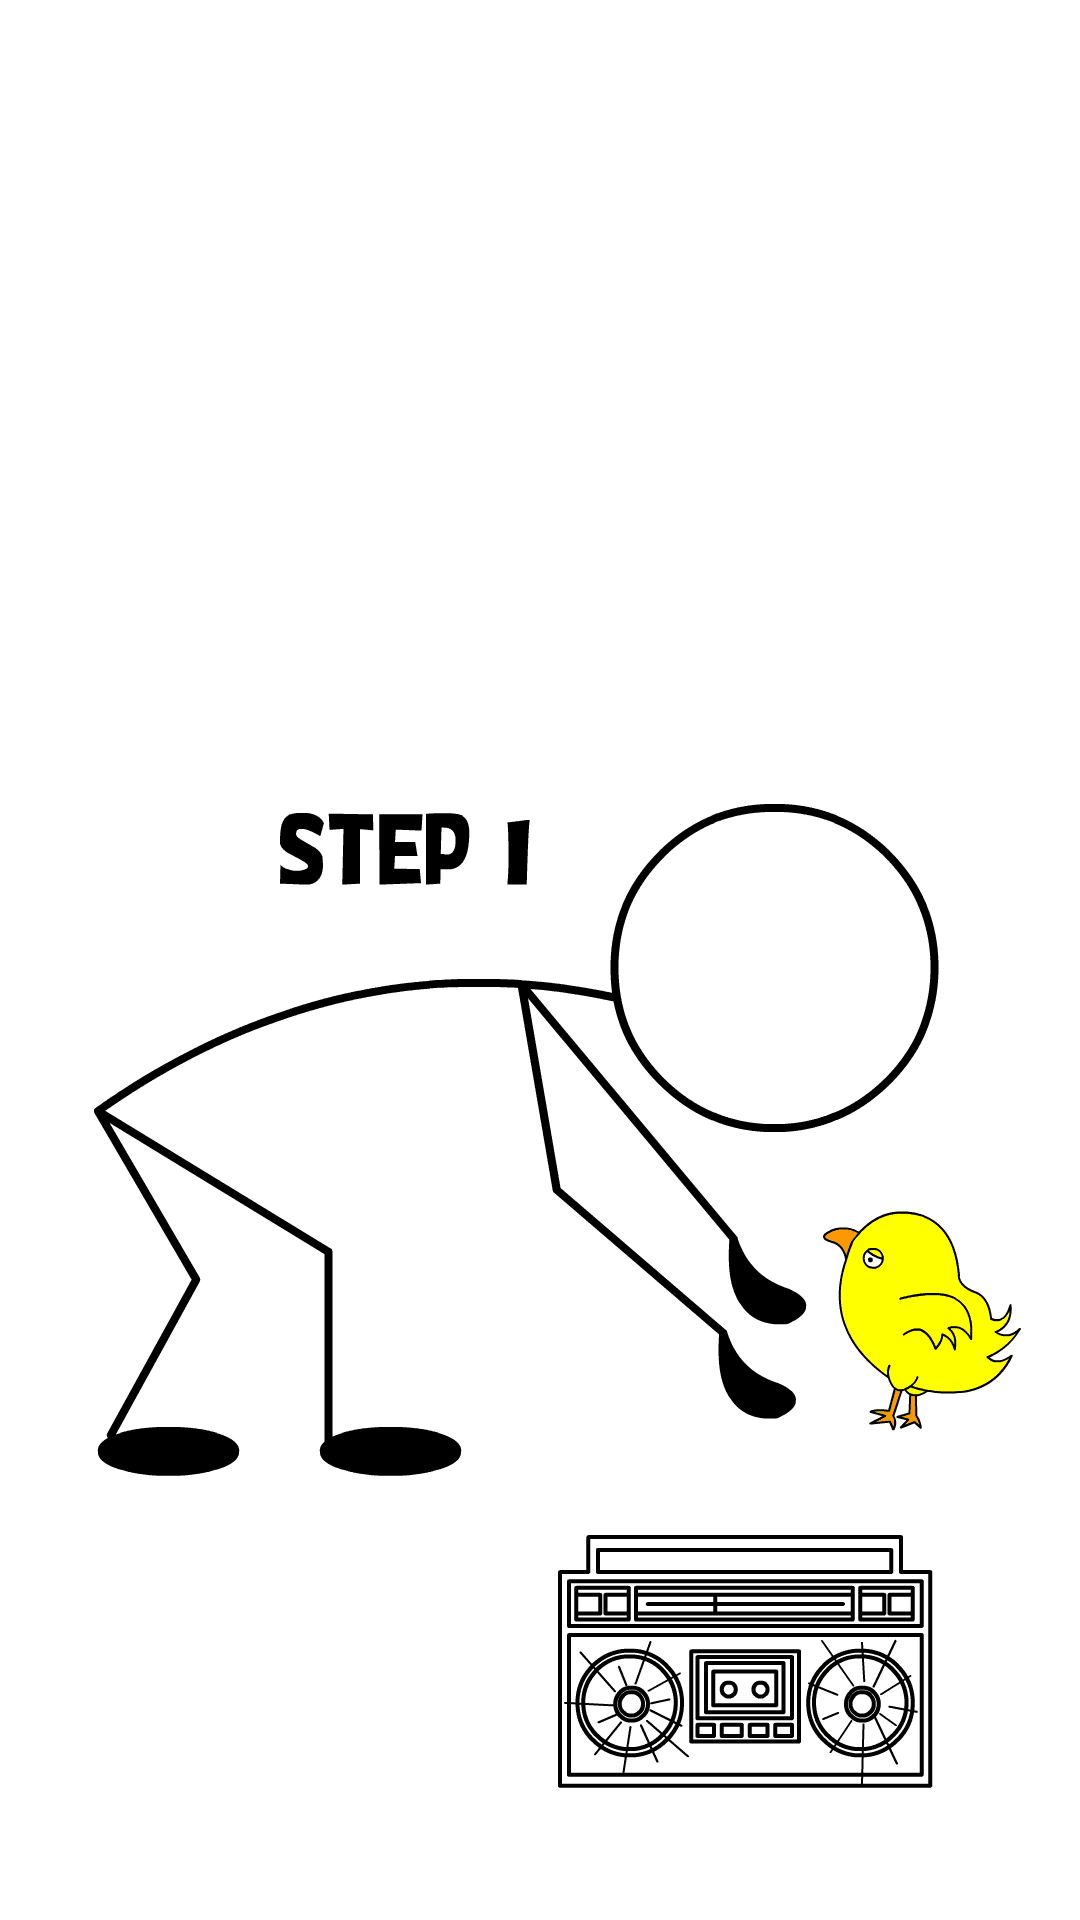 YoToonz #17: How To Pick Up Chicks